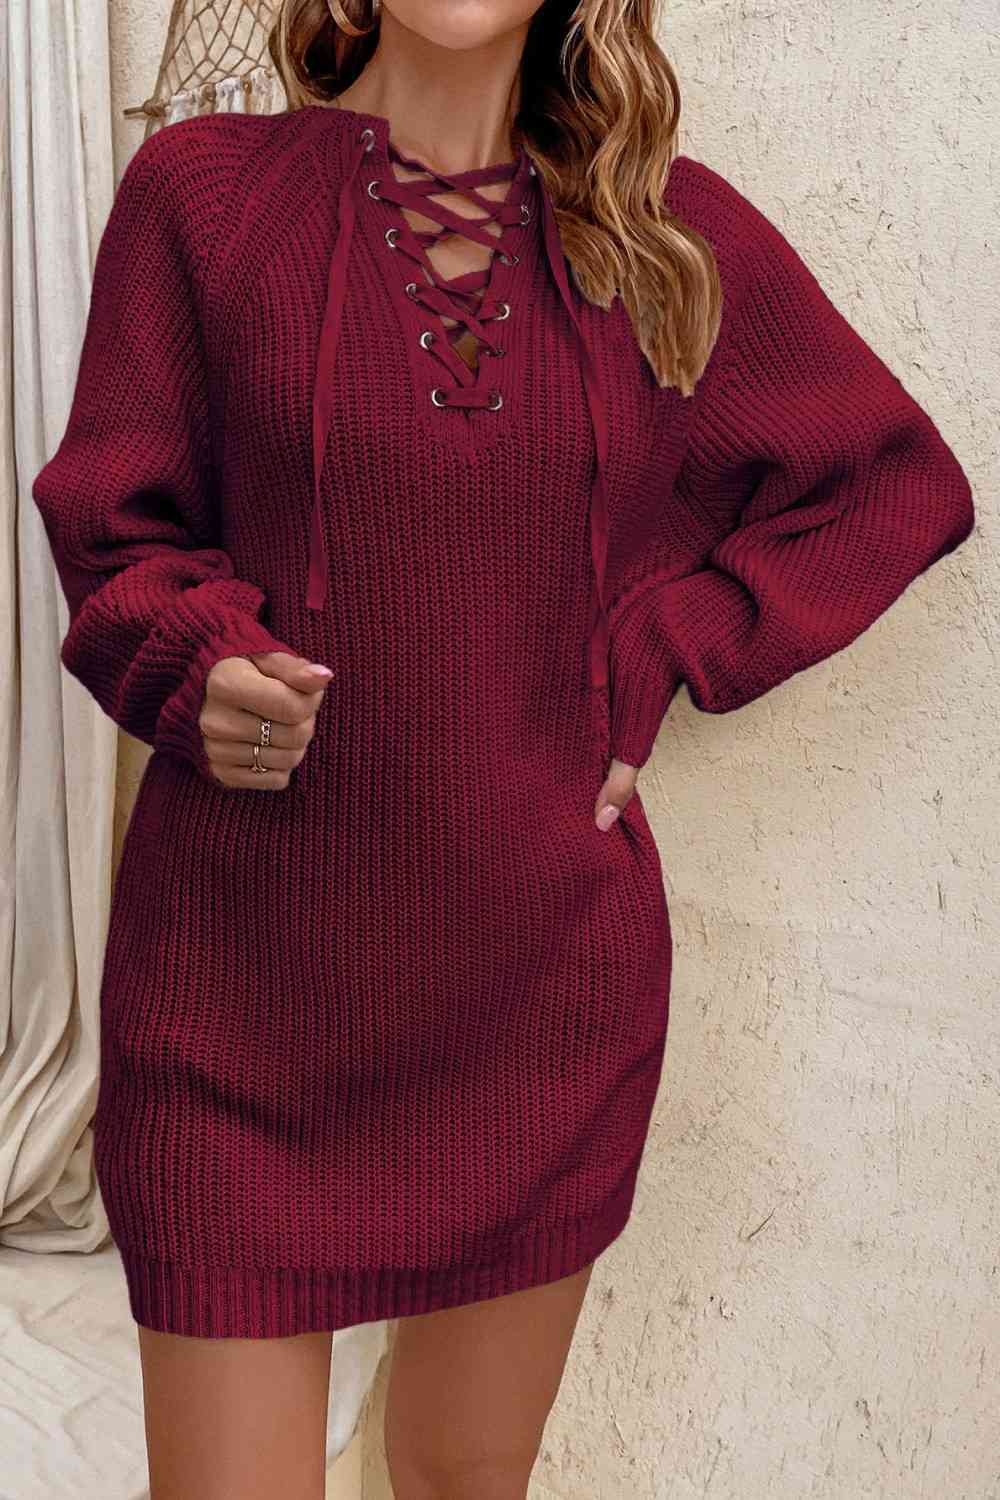 Lace-Up Mini Sweater Dress Wine S 